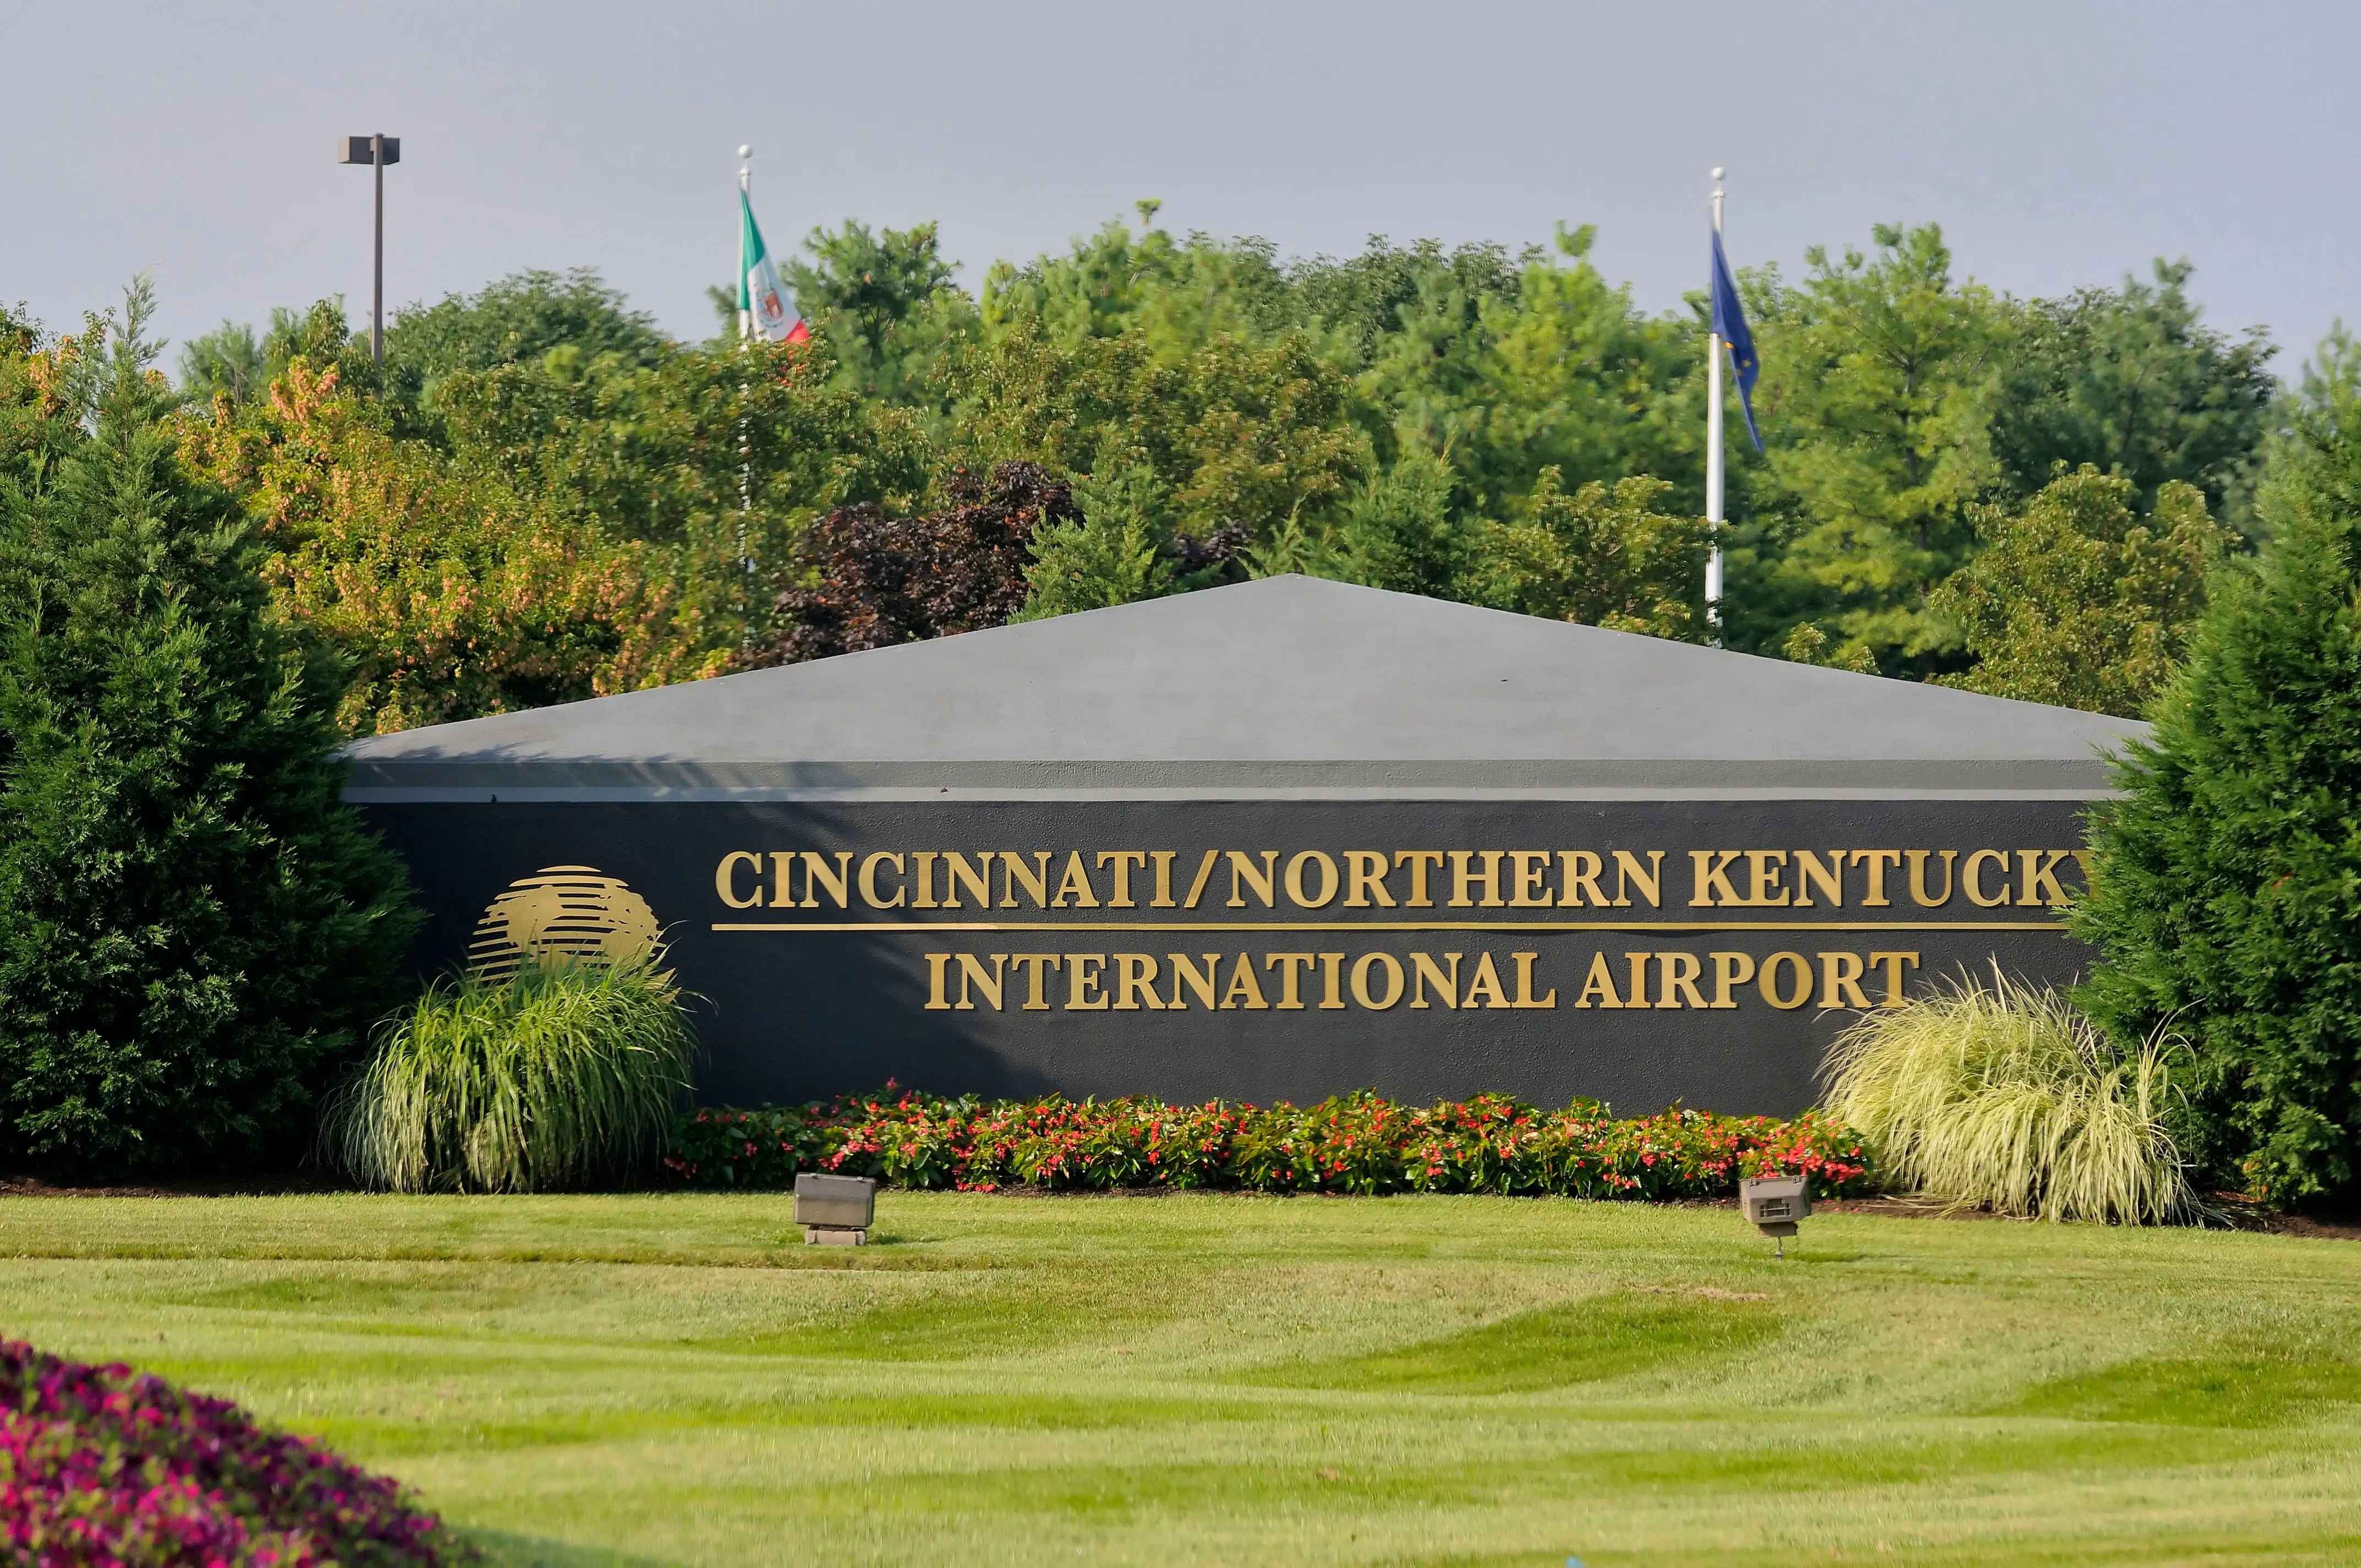 Entrance sign for the Cincinnati/Northern Kentucky International Airport